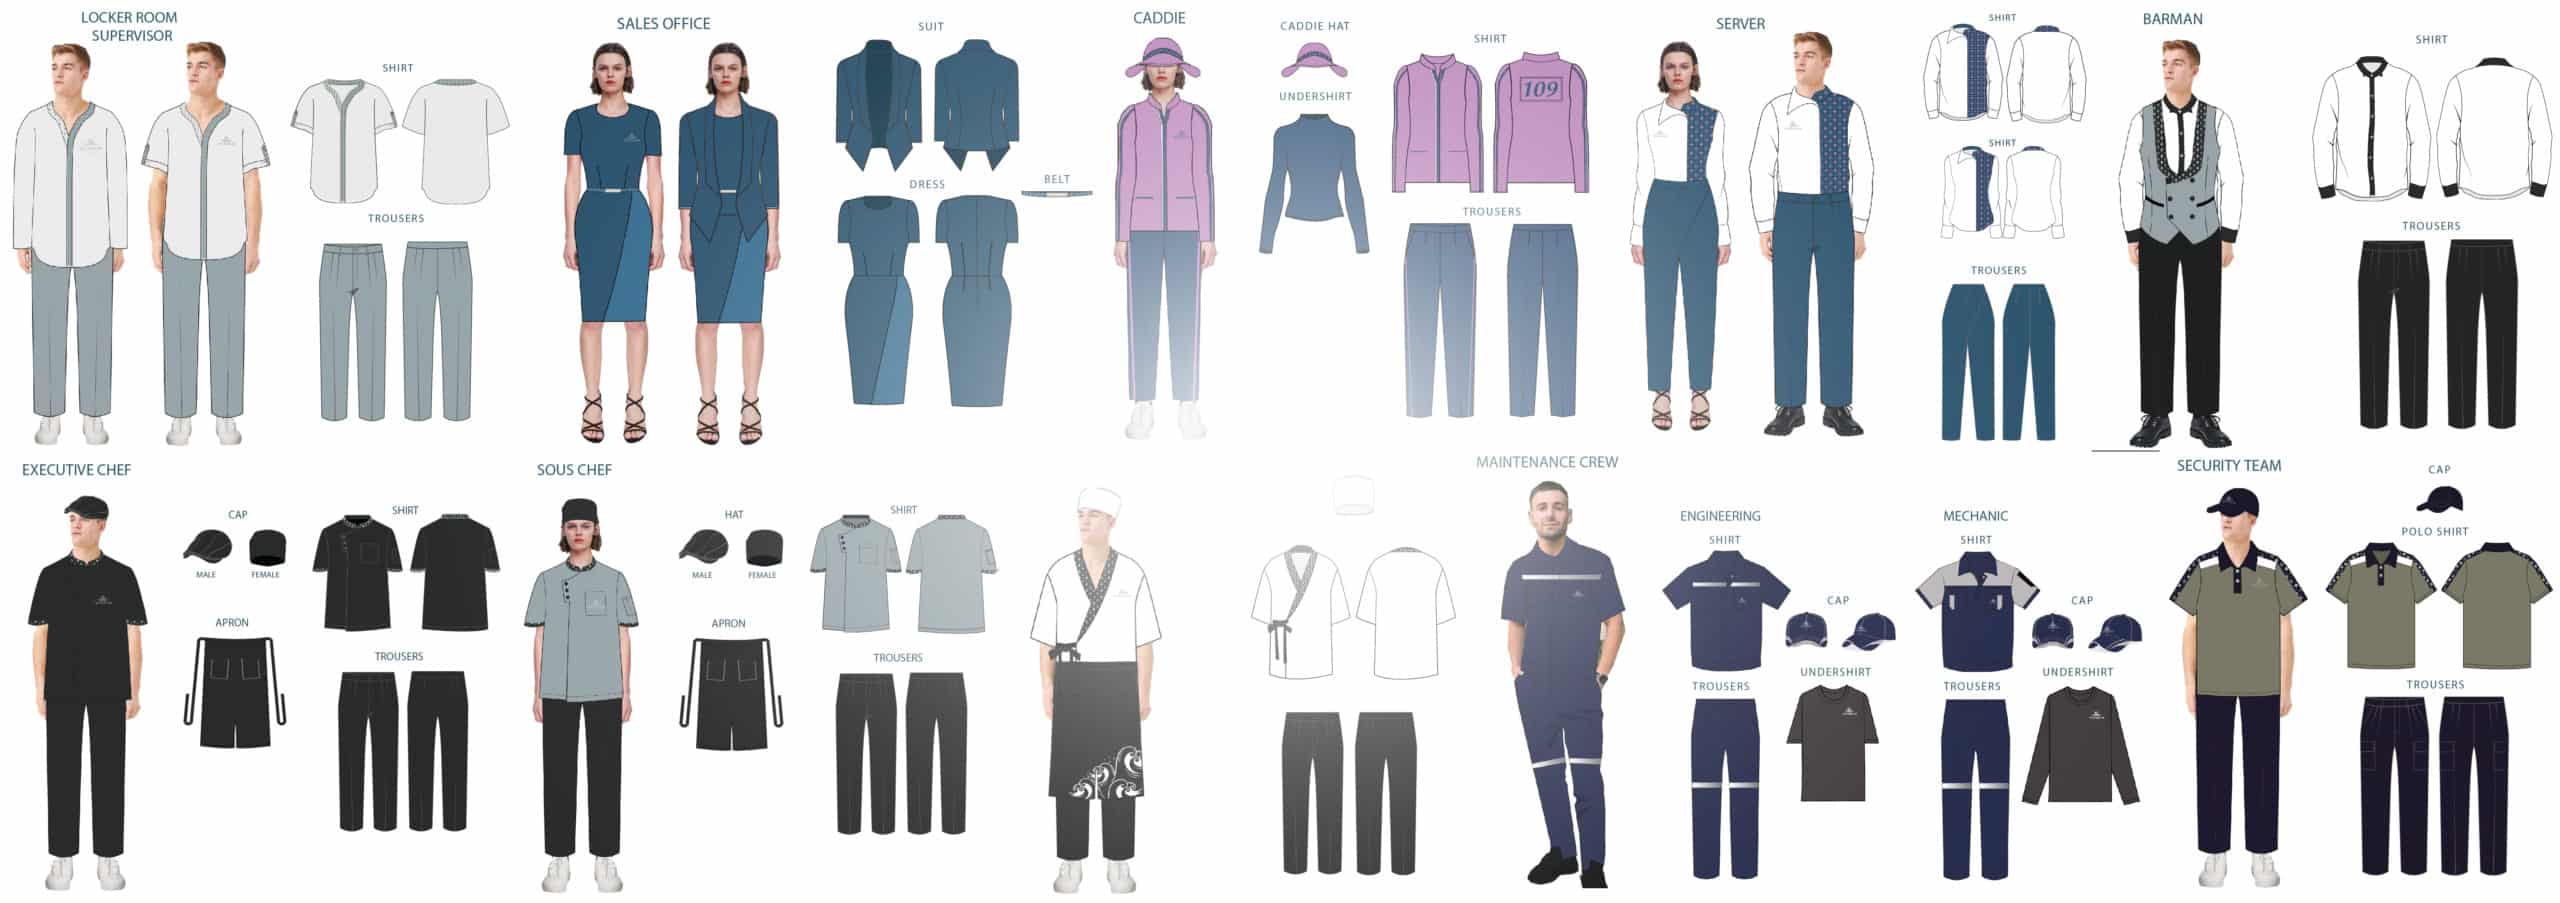 Fenix Custom Staff Uniforms